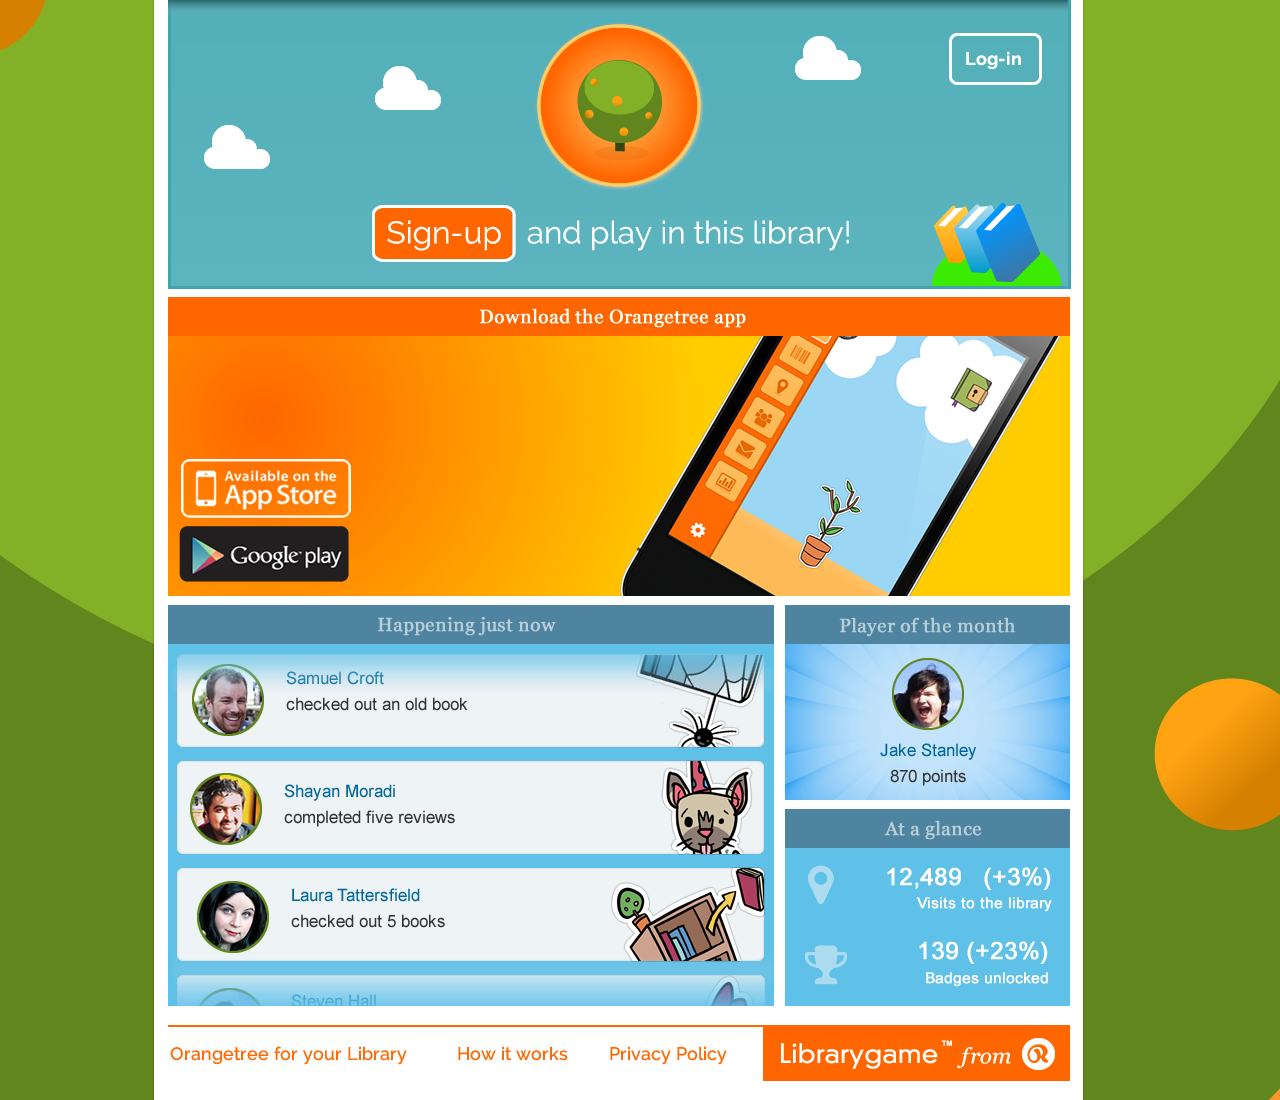 Top 5 online educational games of 2013 - KooBits